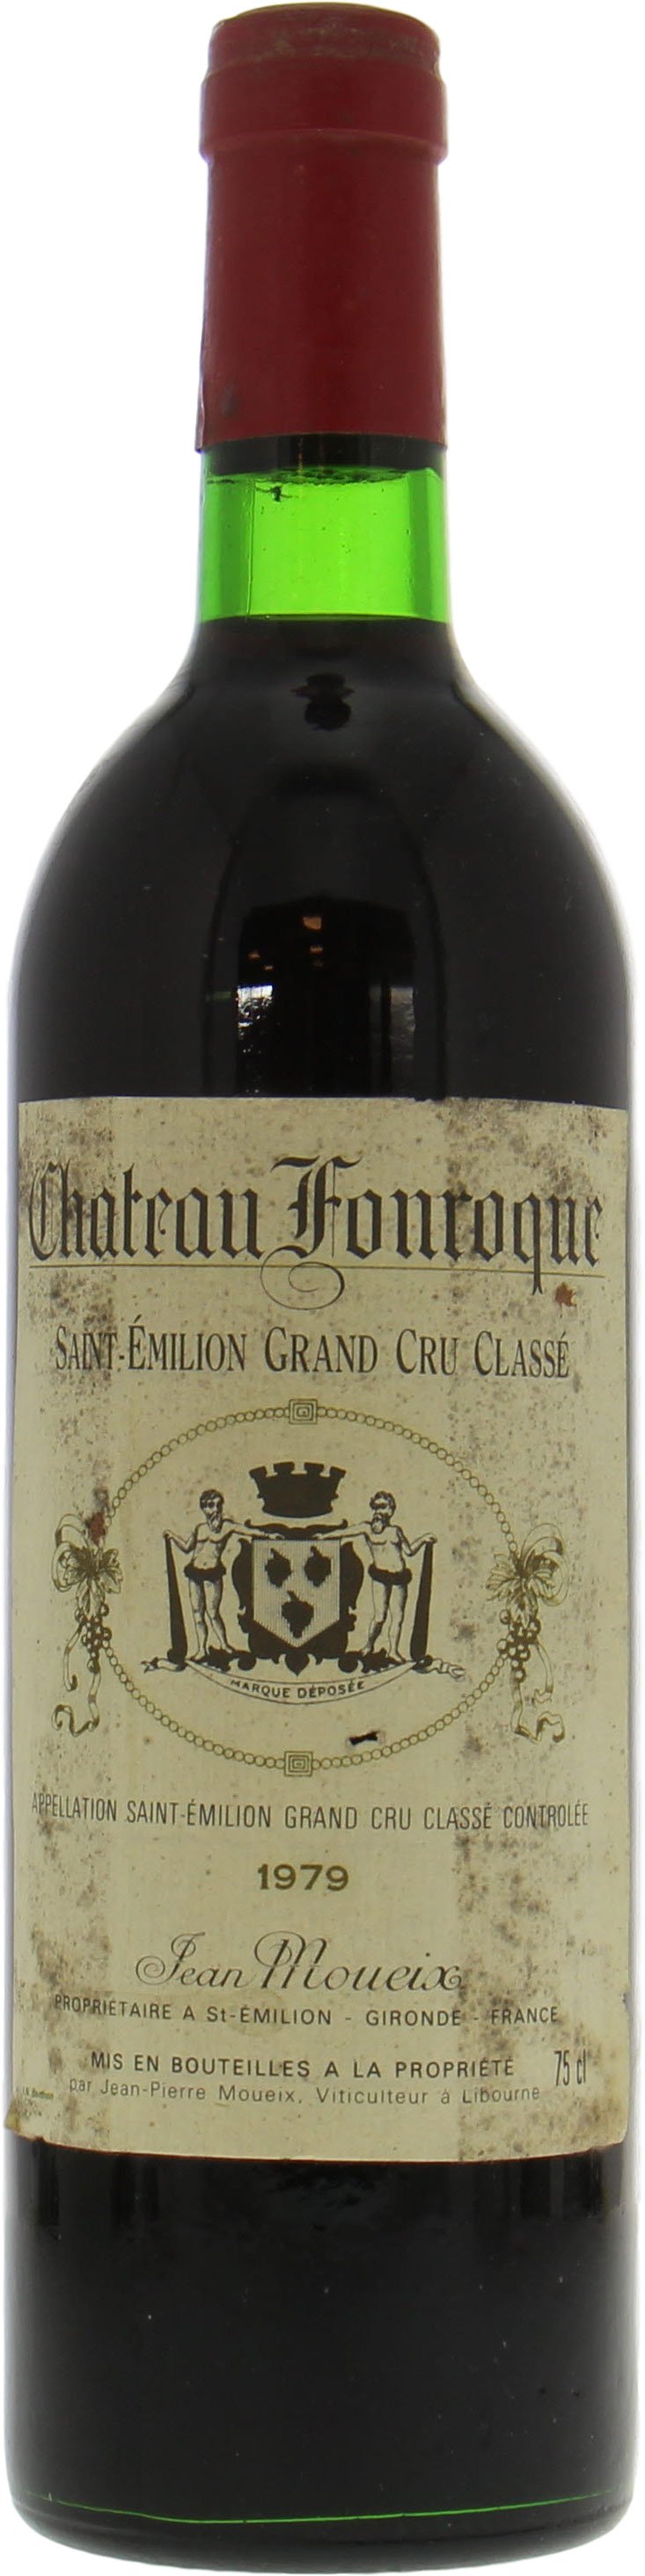 Chateau Fonroque - Chateau Fonroque 1979